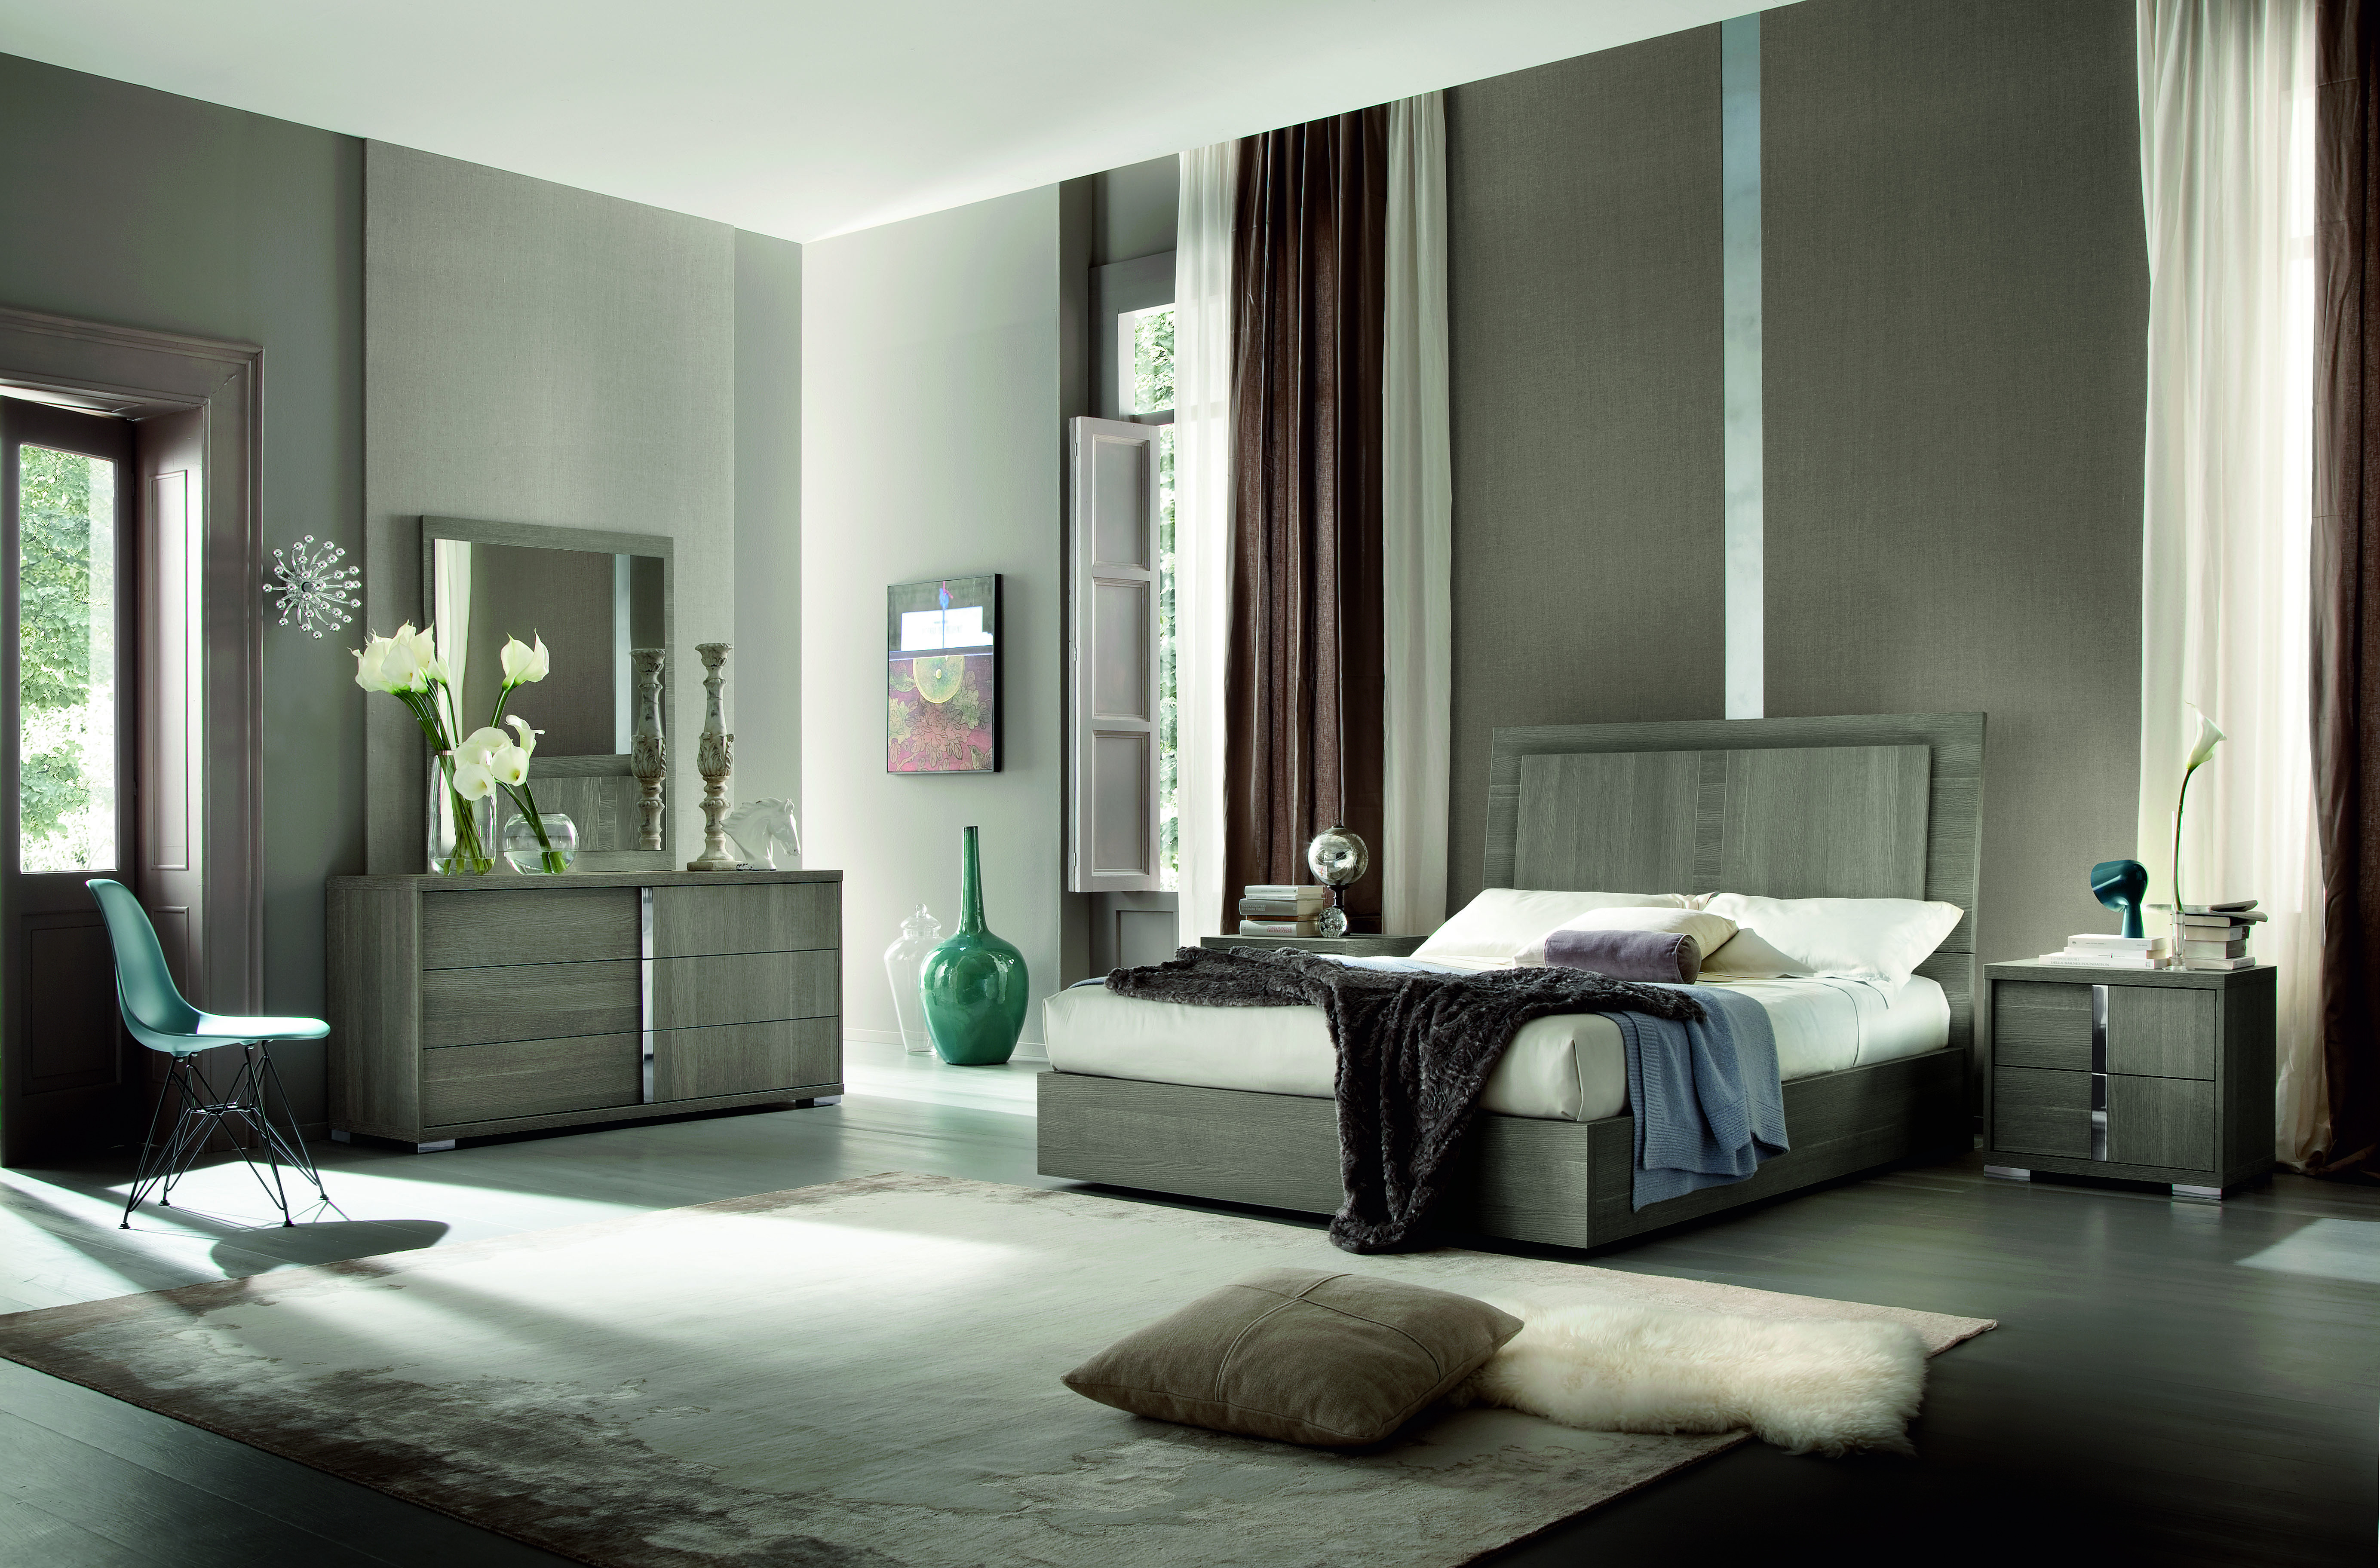 Taranto-bedroom.jpg#asset:4080